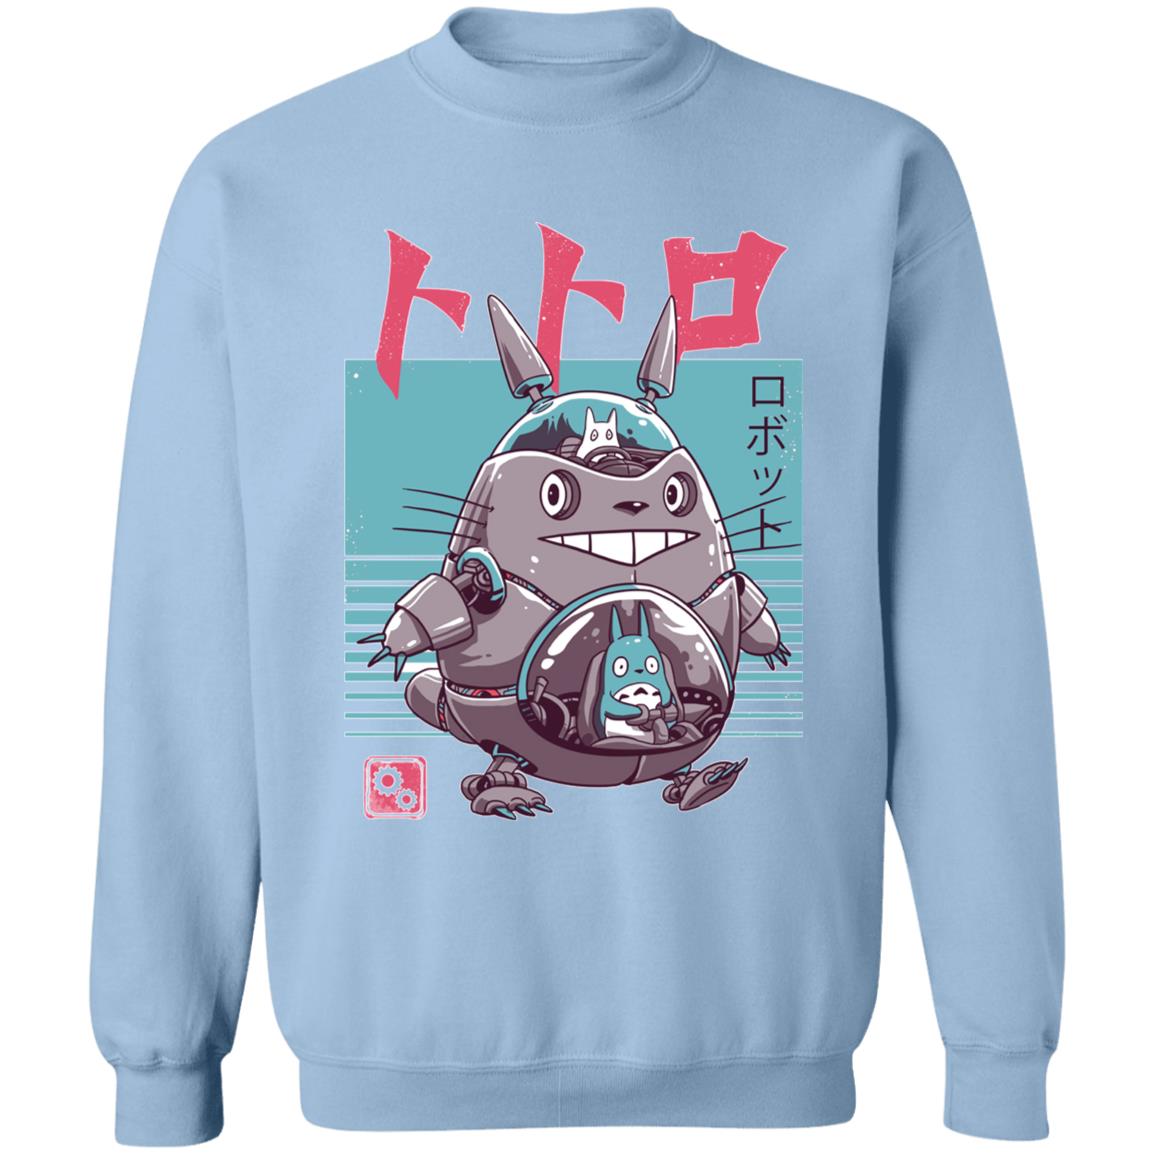 Totoro Bot Sweatshirt